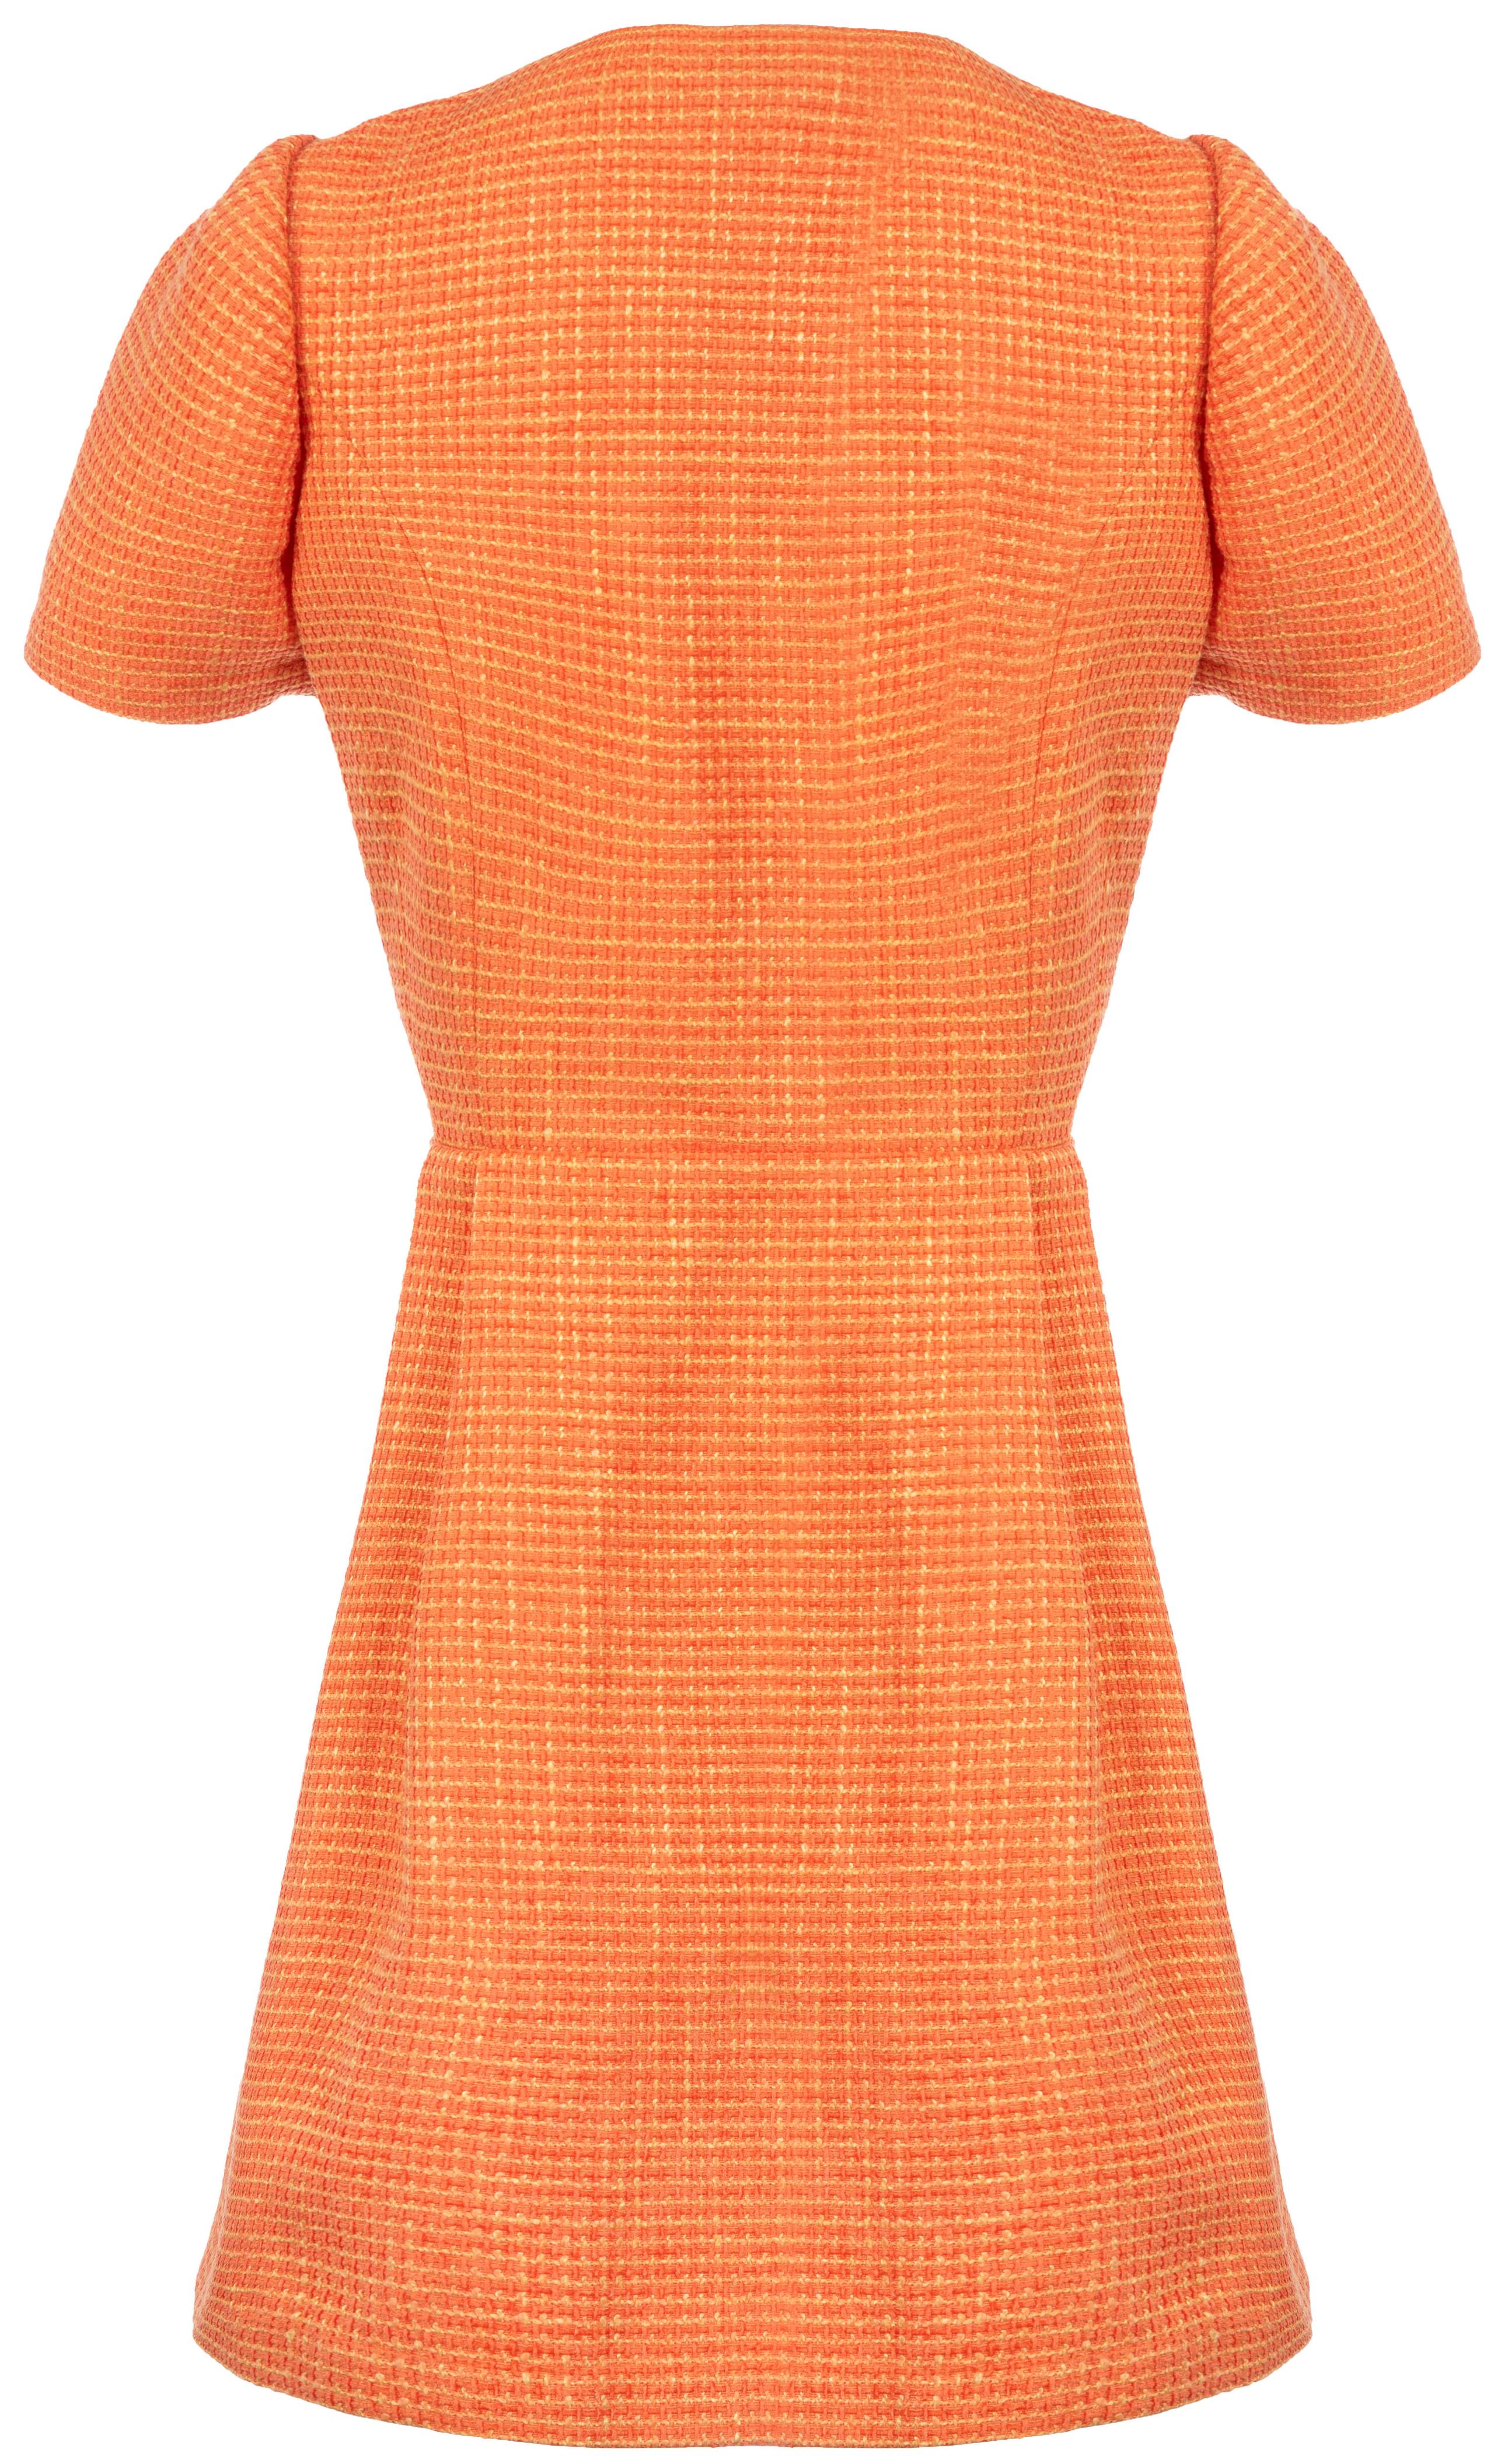 Colette Dress - Apricot Melange